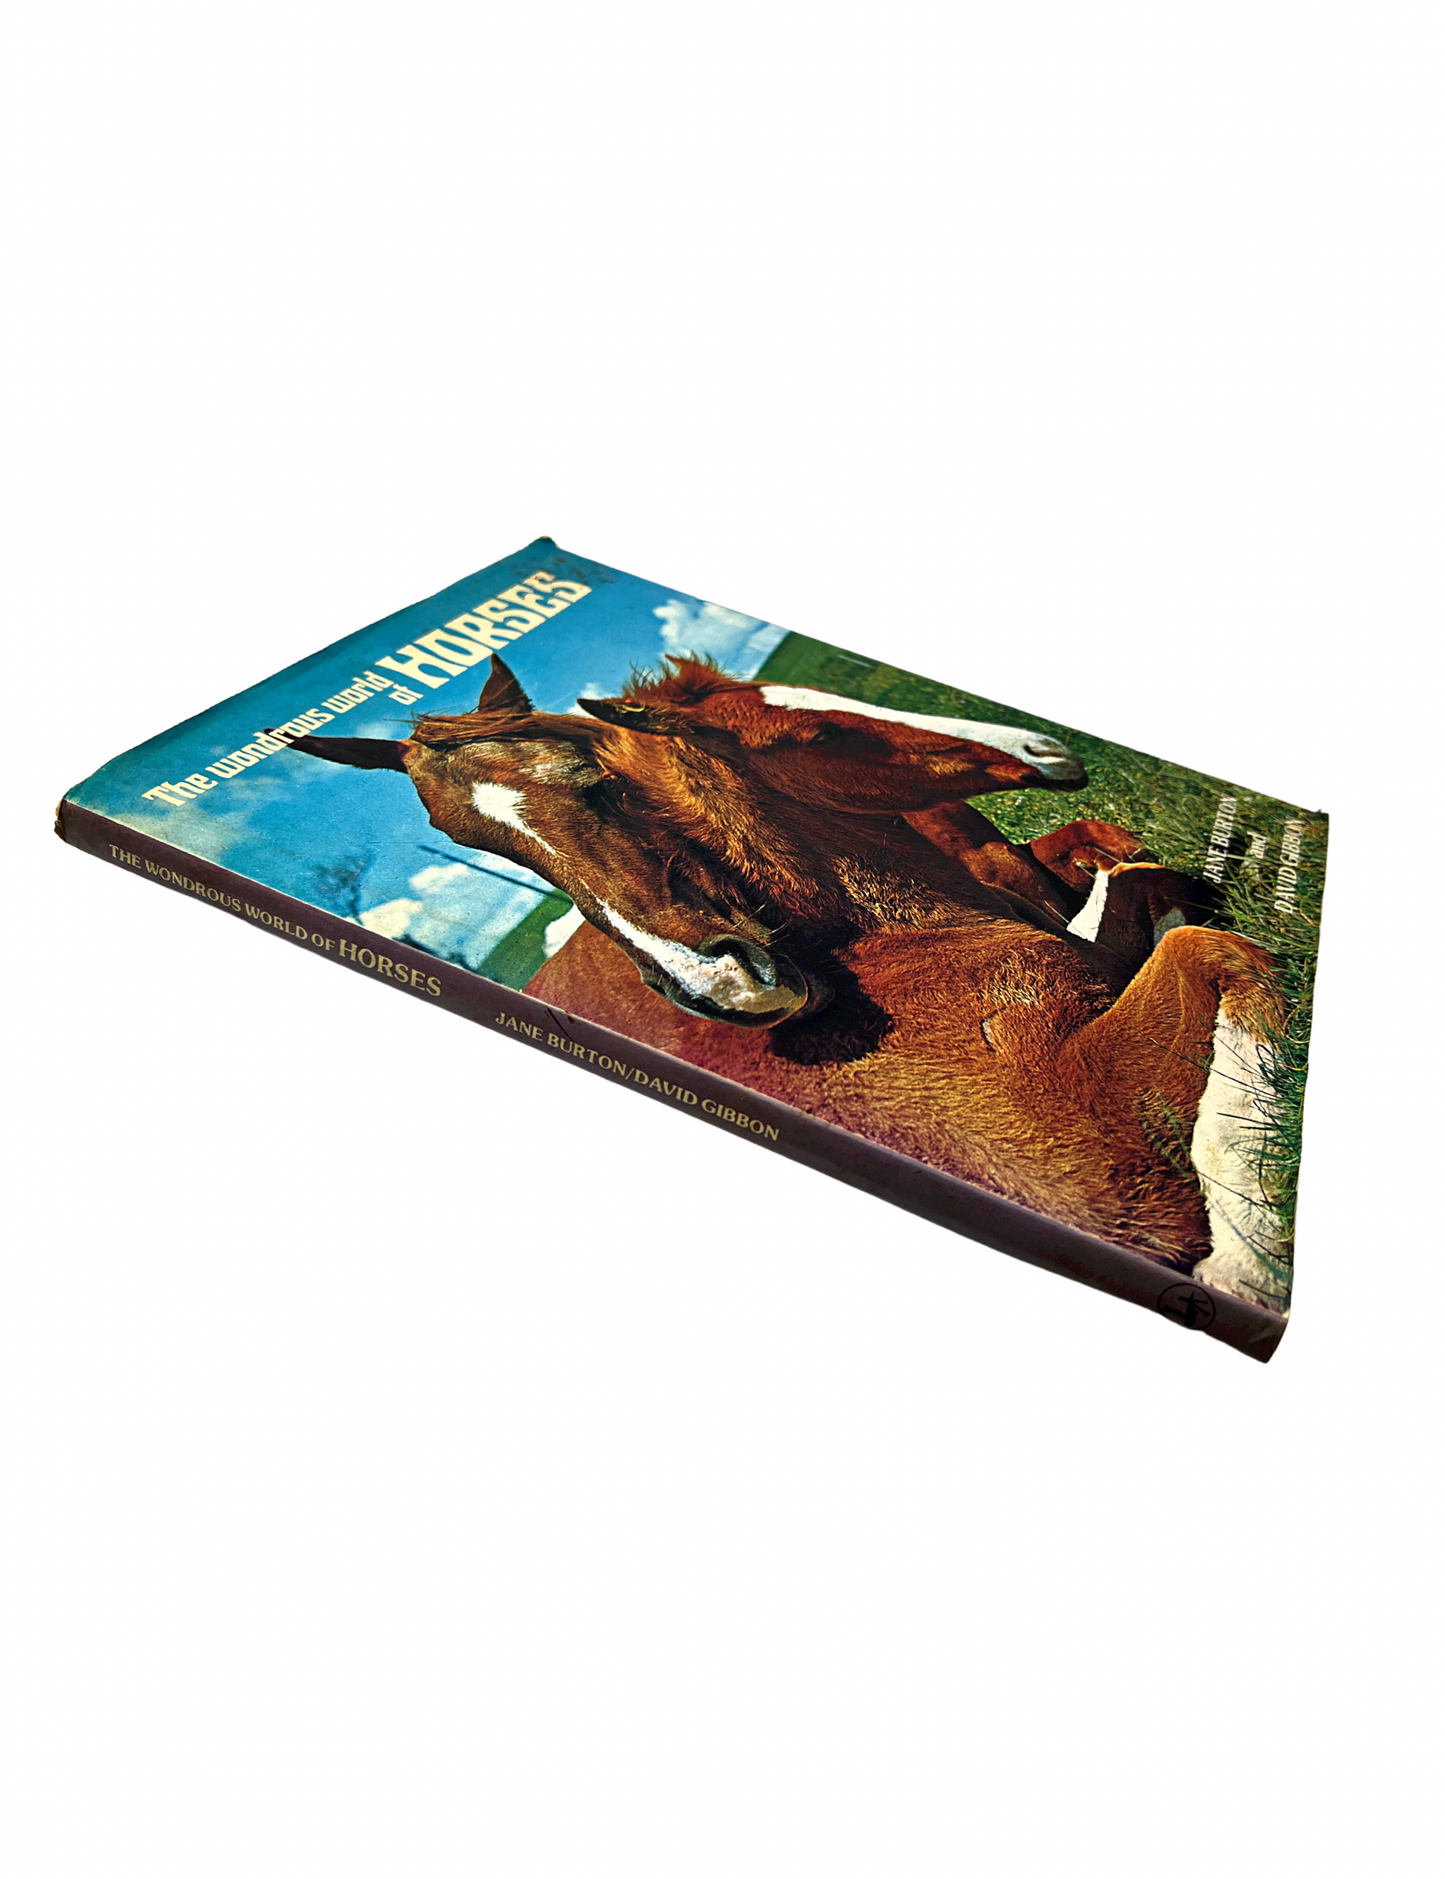 1976 The Wondrous World of Horses Glossy Animal Nature Photo Book